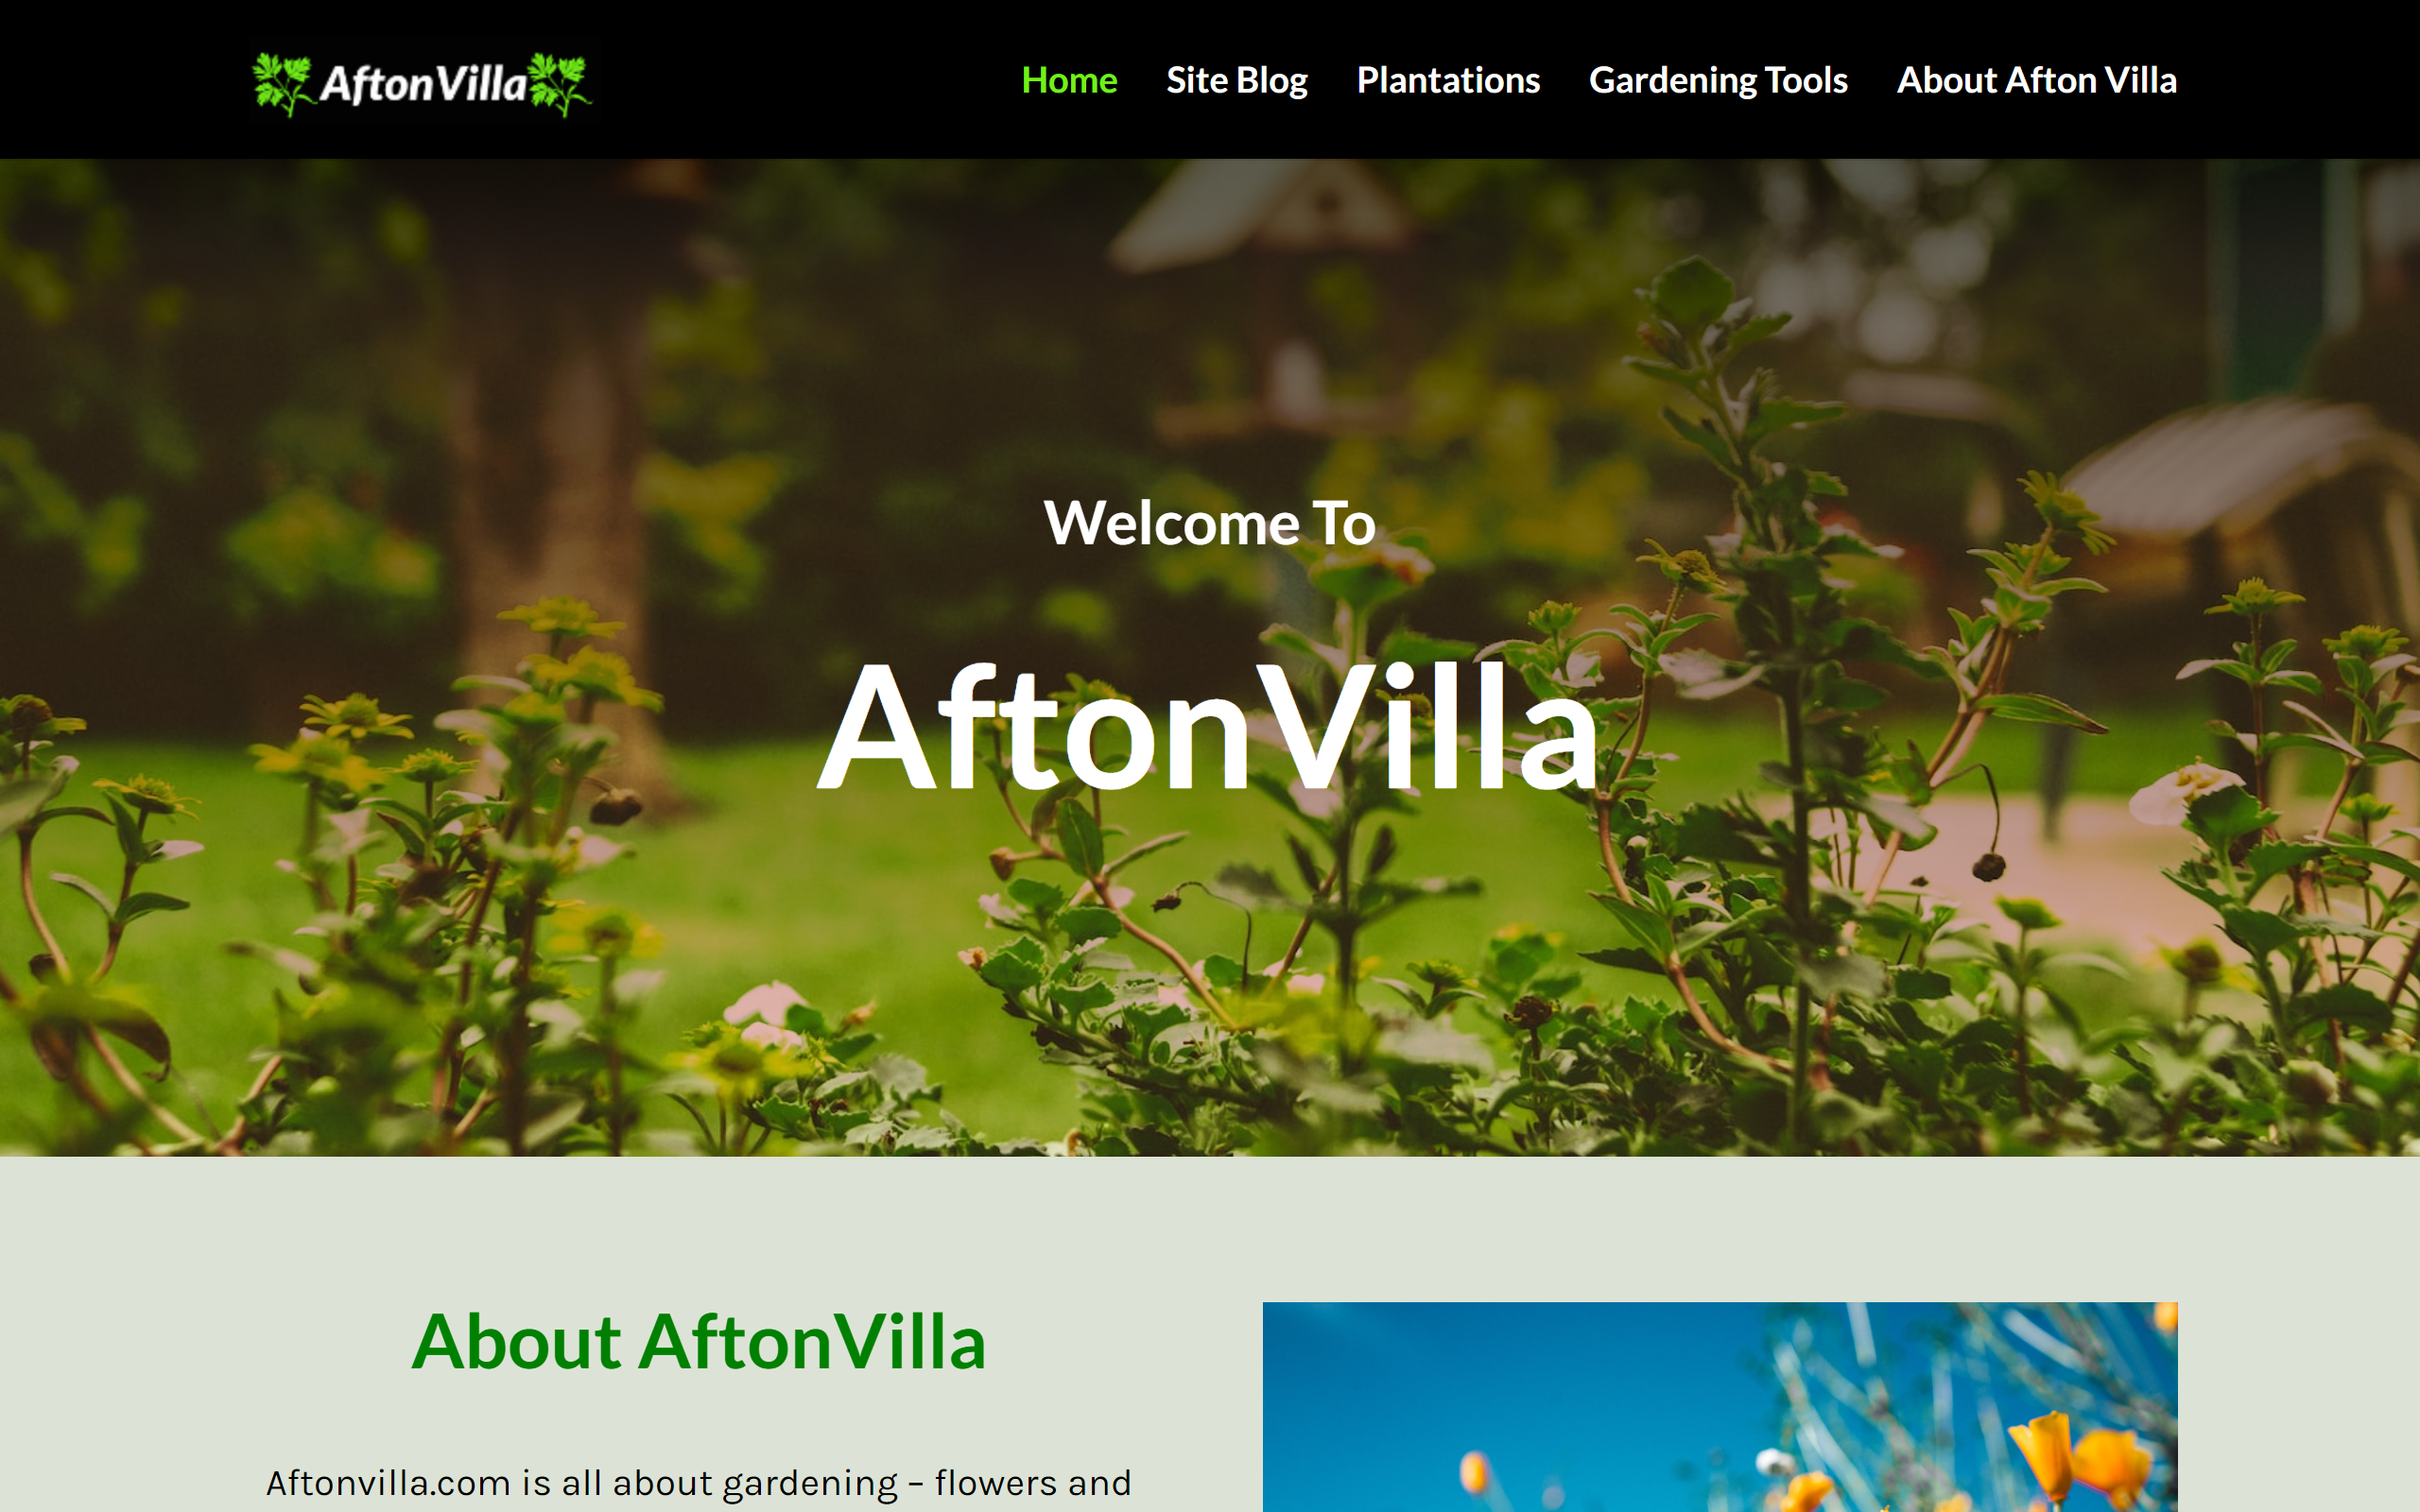 Afton Villa gardening blog